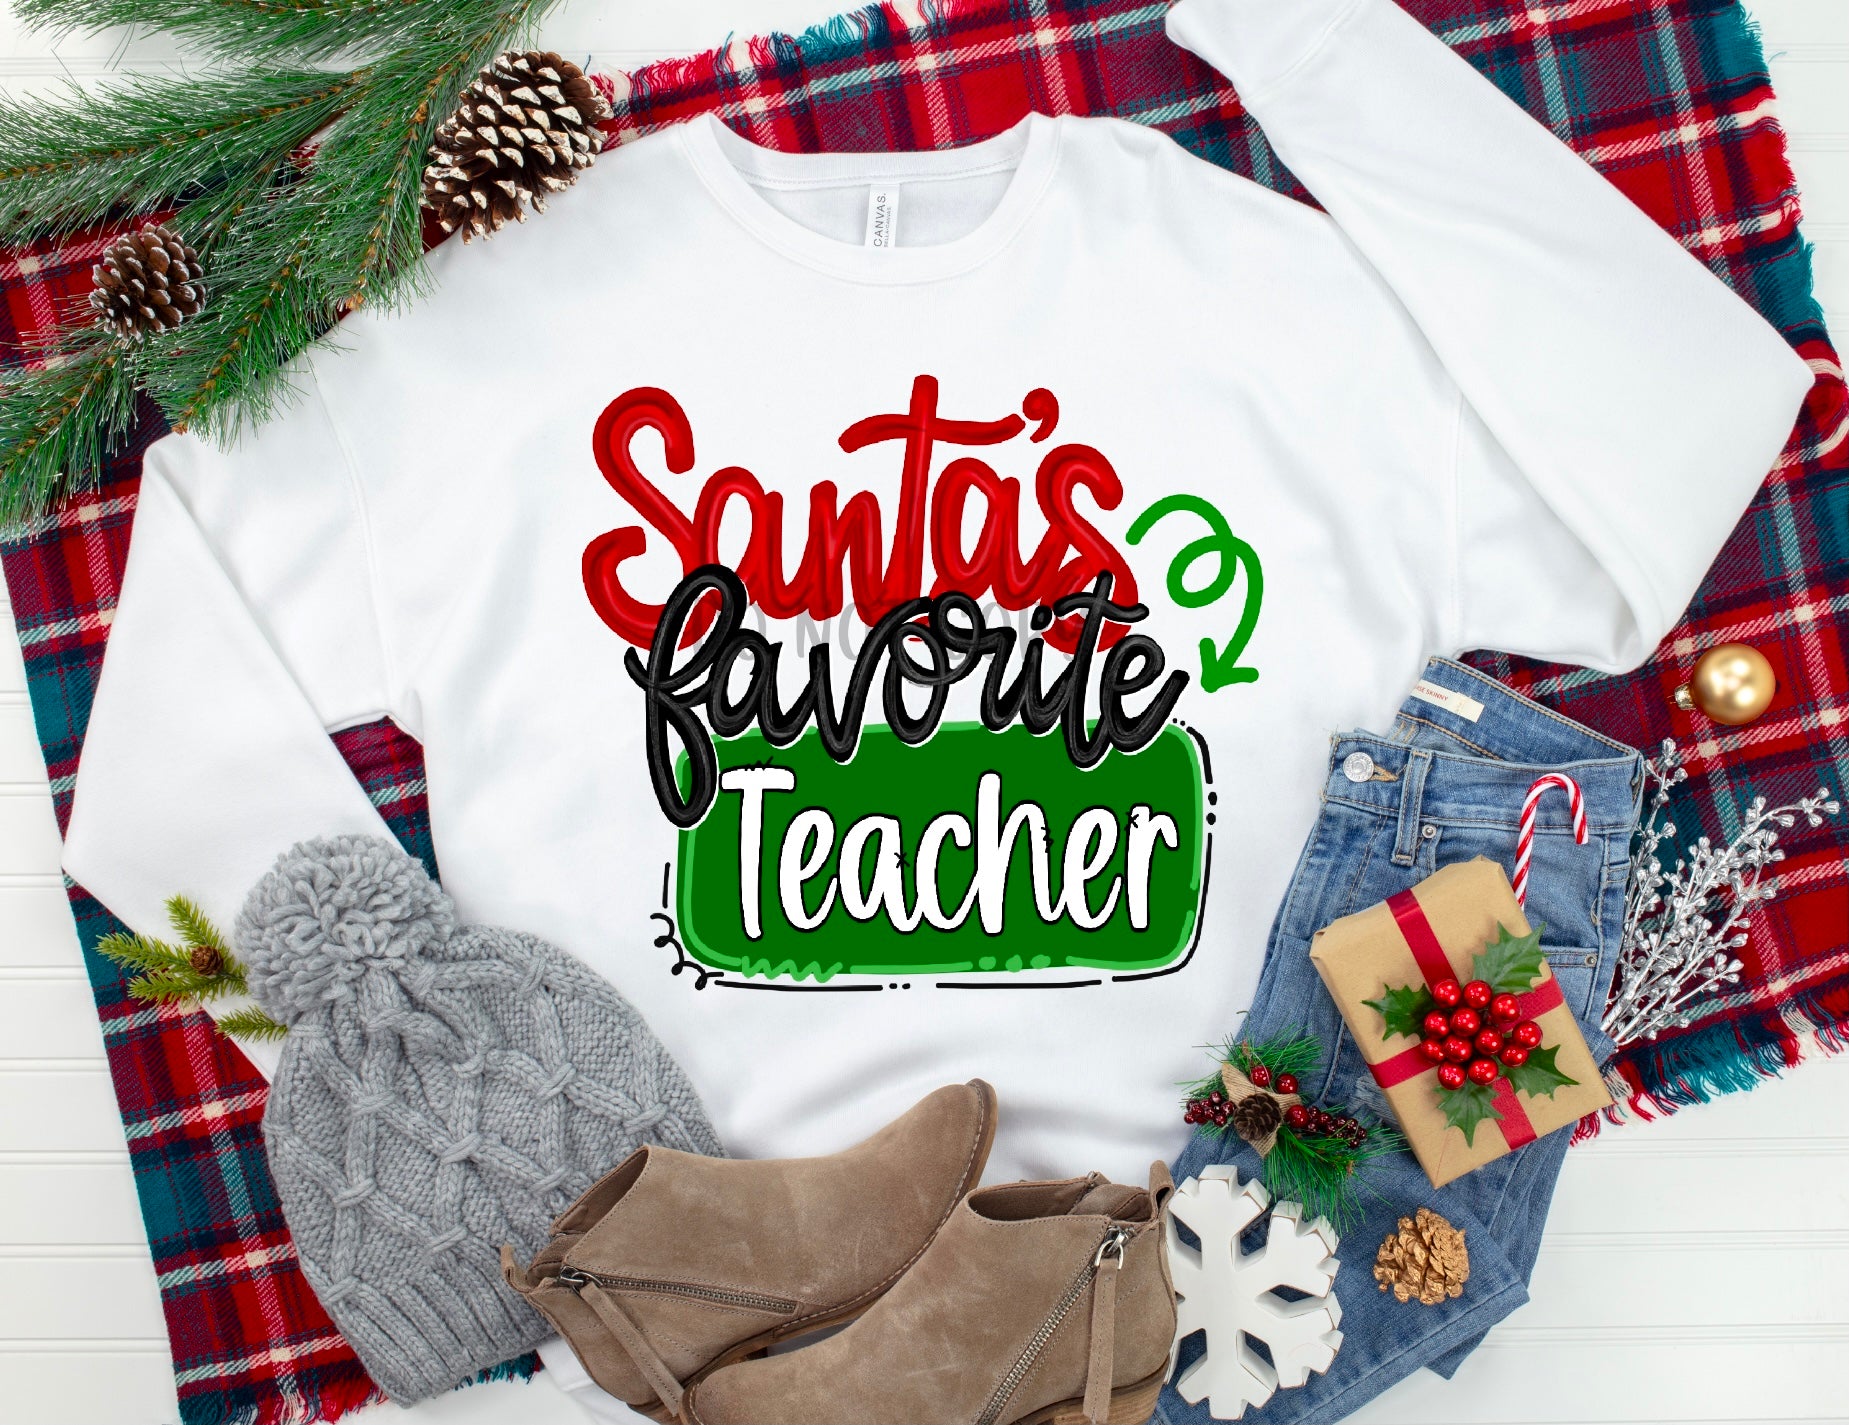 Santa’s favorite teacher Screen Print Transfer High Heat